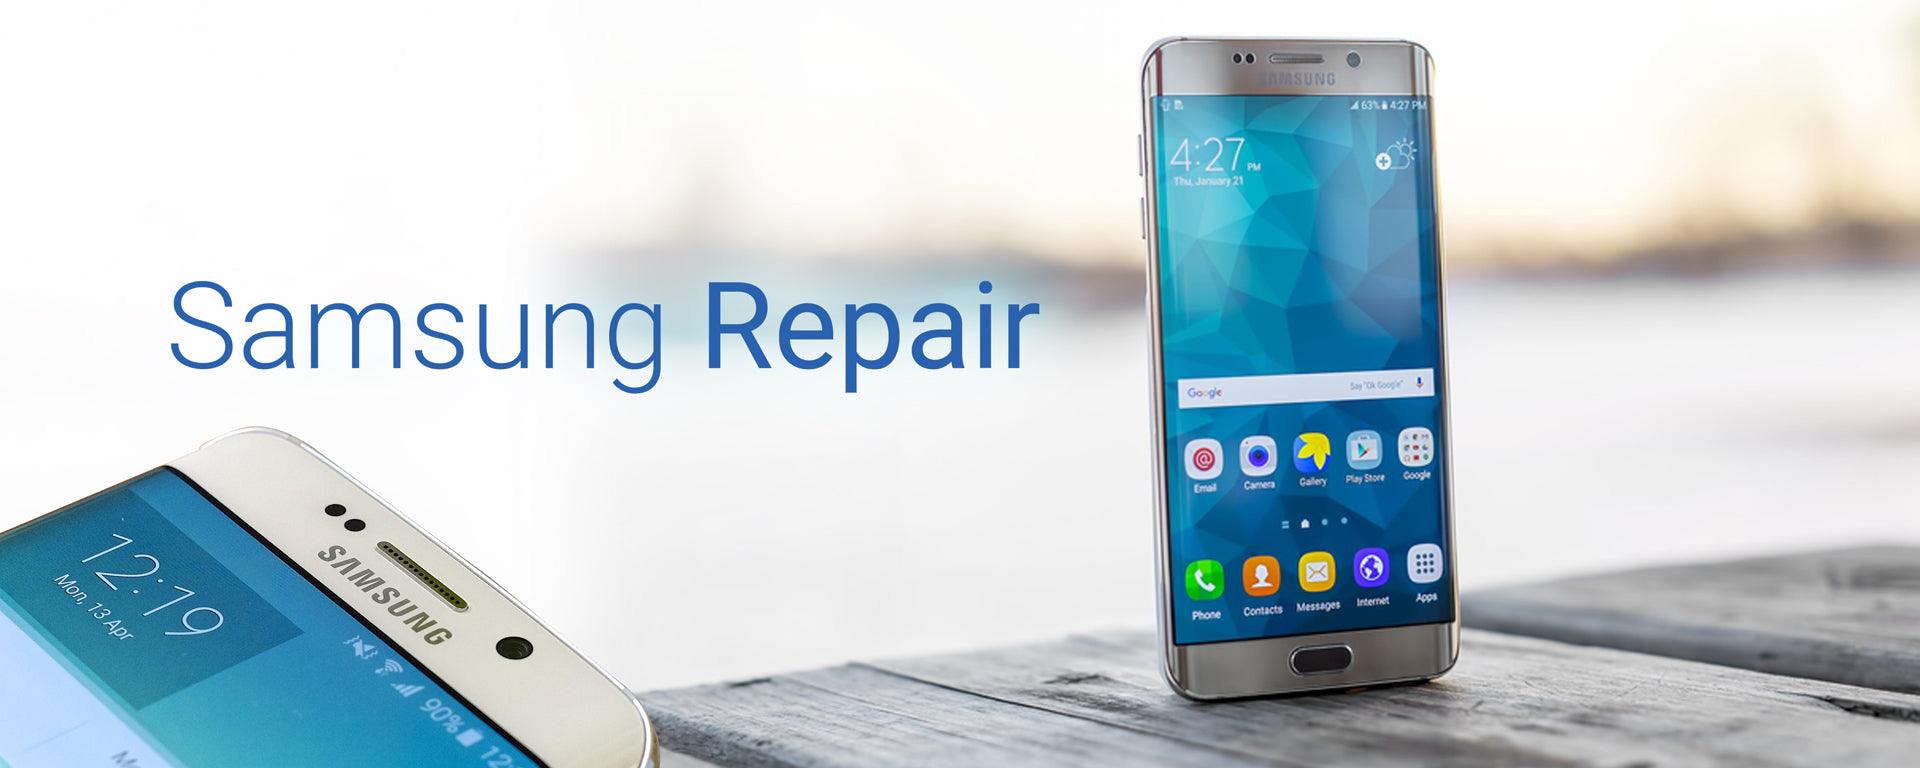 Samsung Galaxy Note Series Repairs - Regen Computers